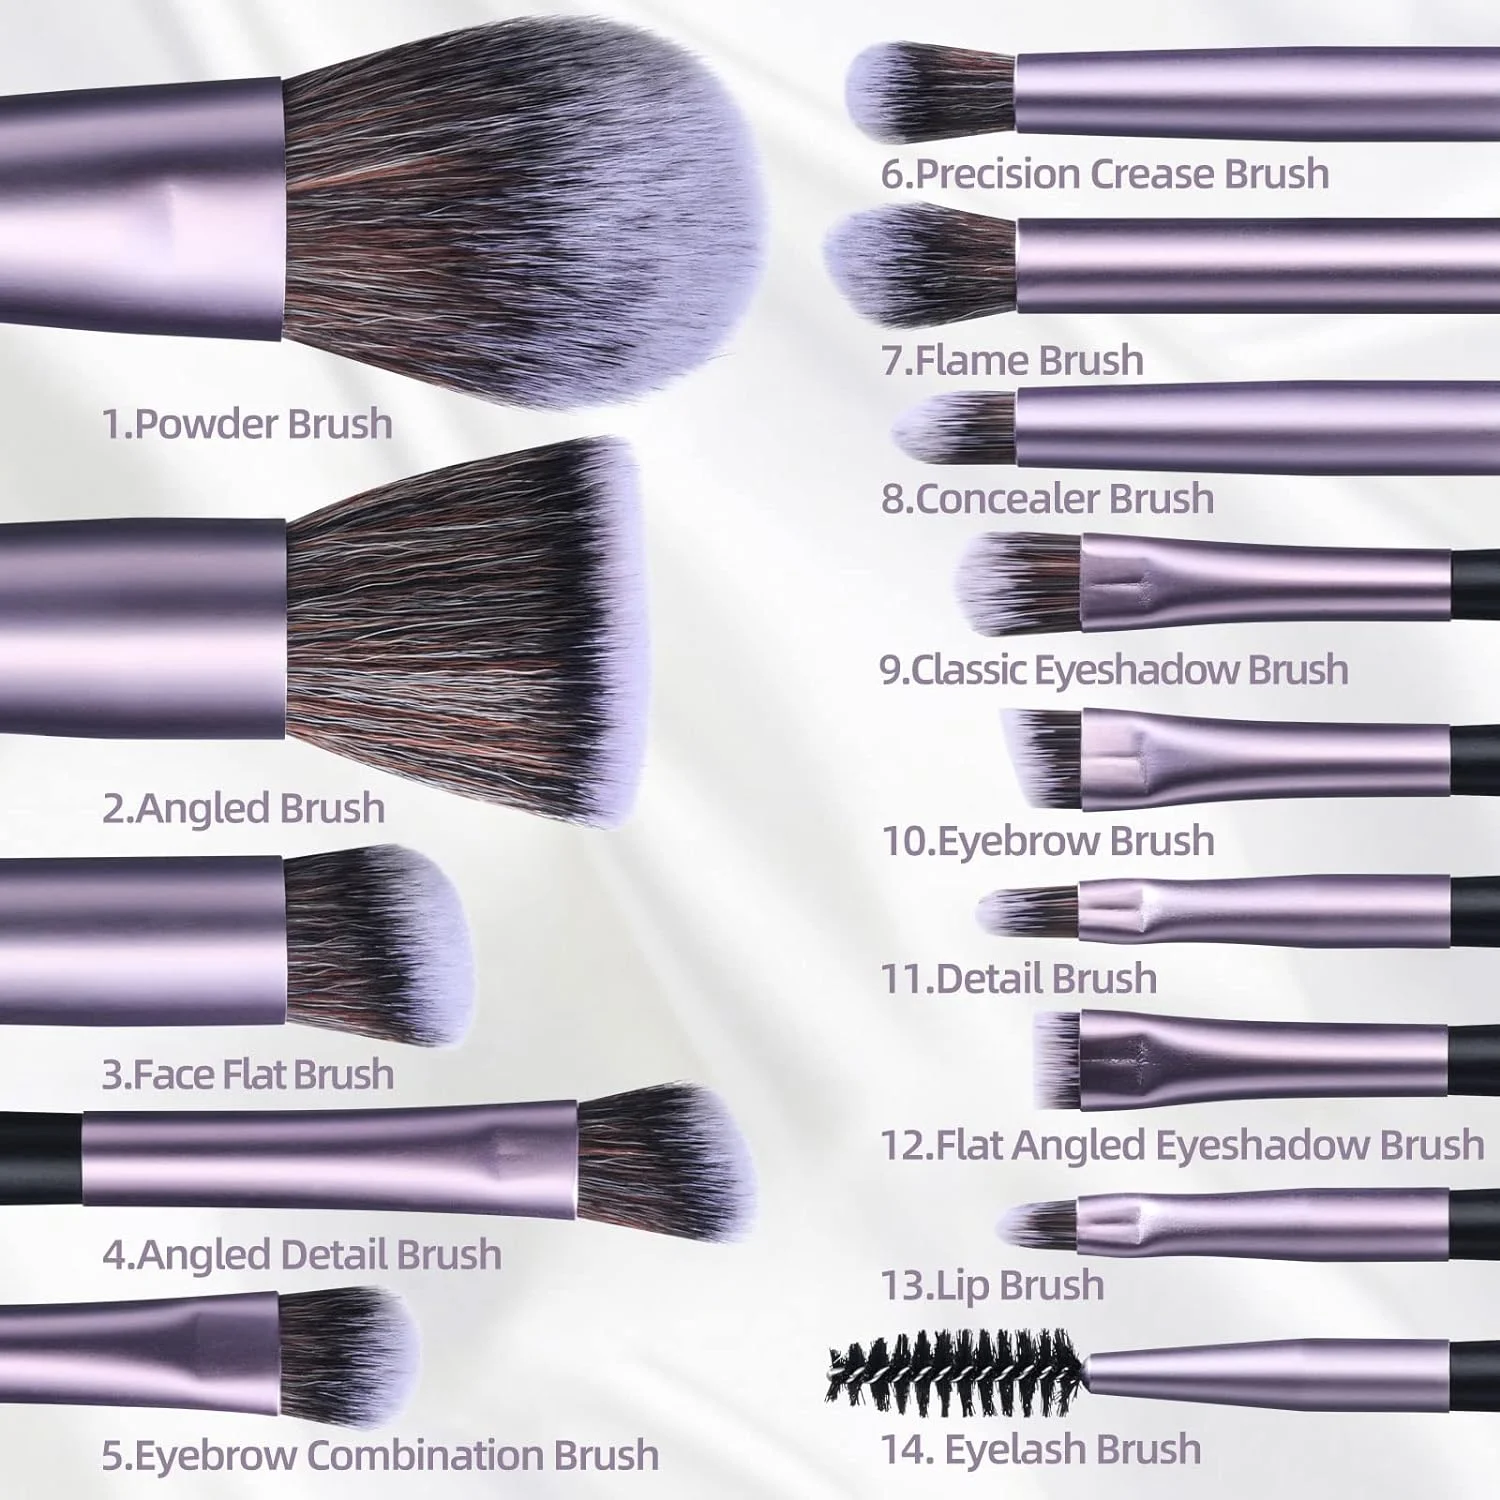 Travel Makeup Brush Set Foundation Powder Concealers Eye Shadows Makeup Set with LED light Mirror 14 Pcs (Purple)